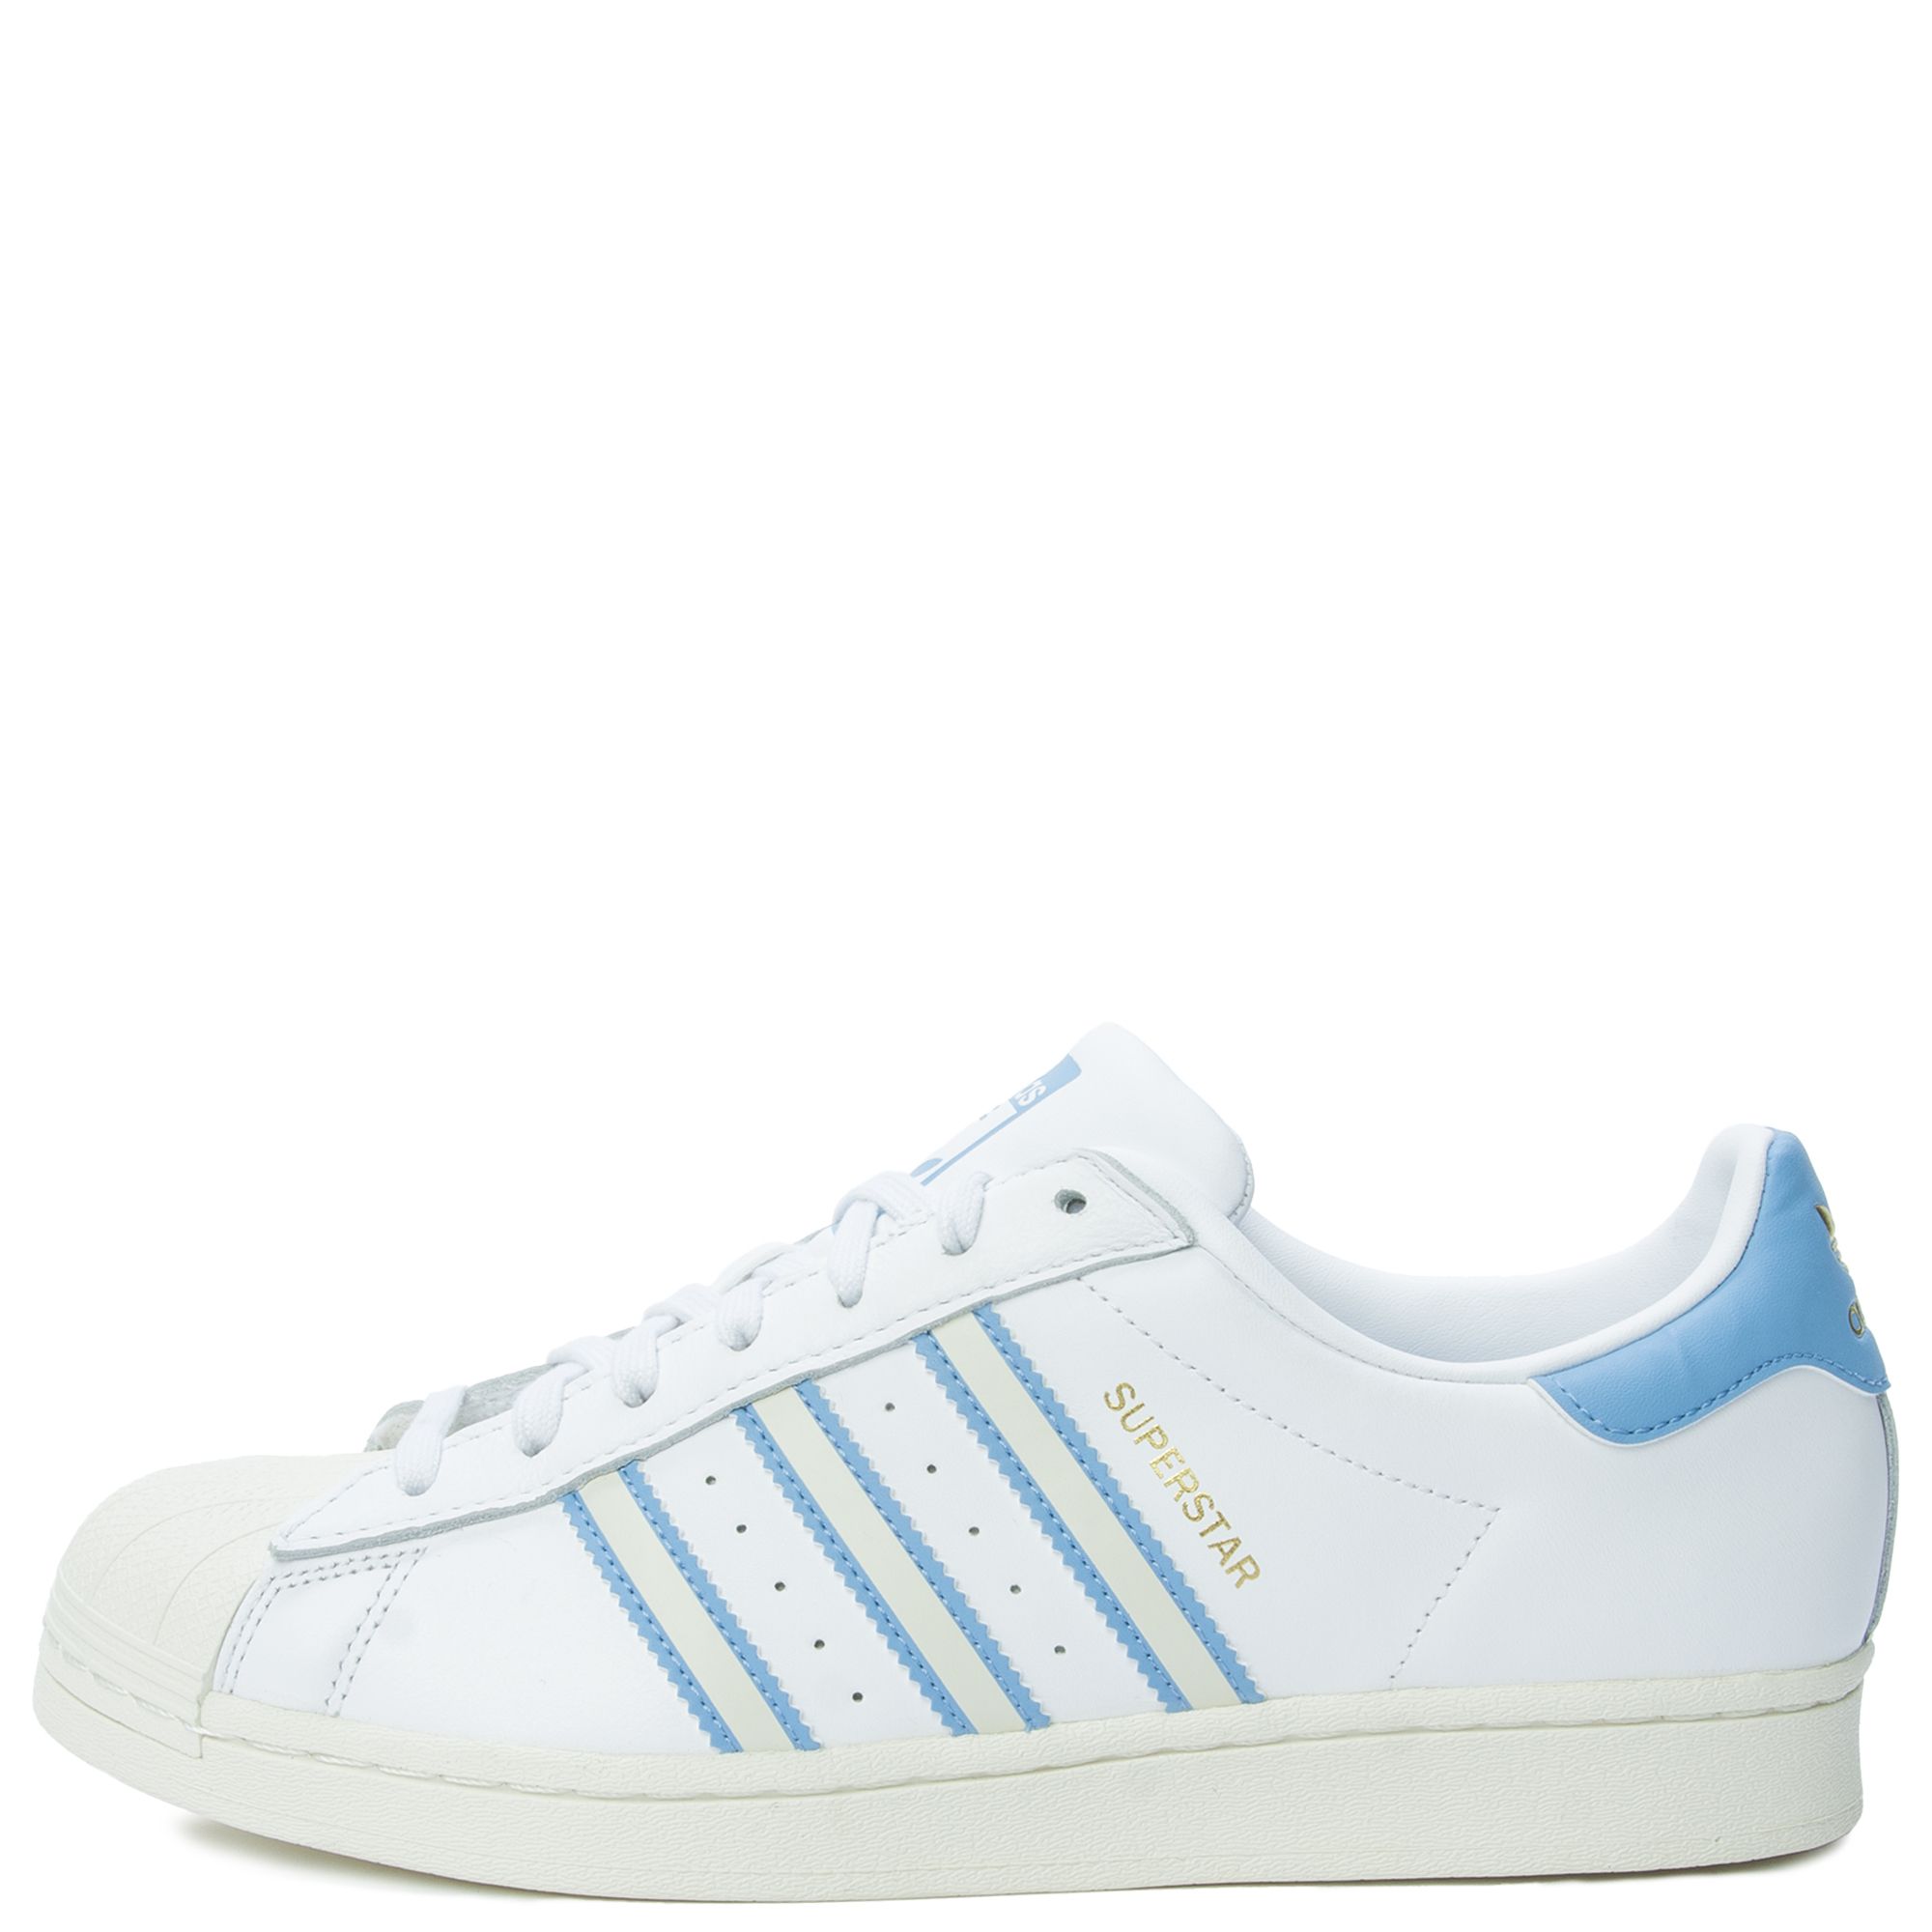 Adidas Superstar Shoes - Men's - Cloud White / Off White / Light Blue - 10